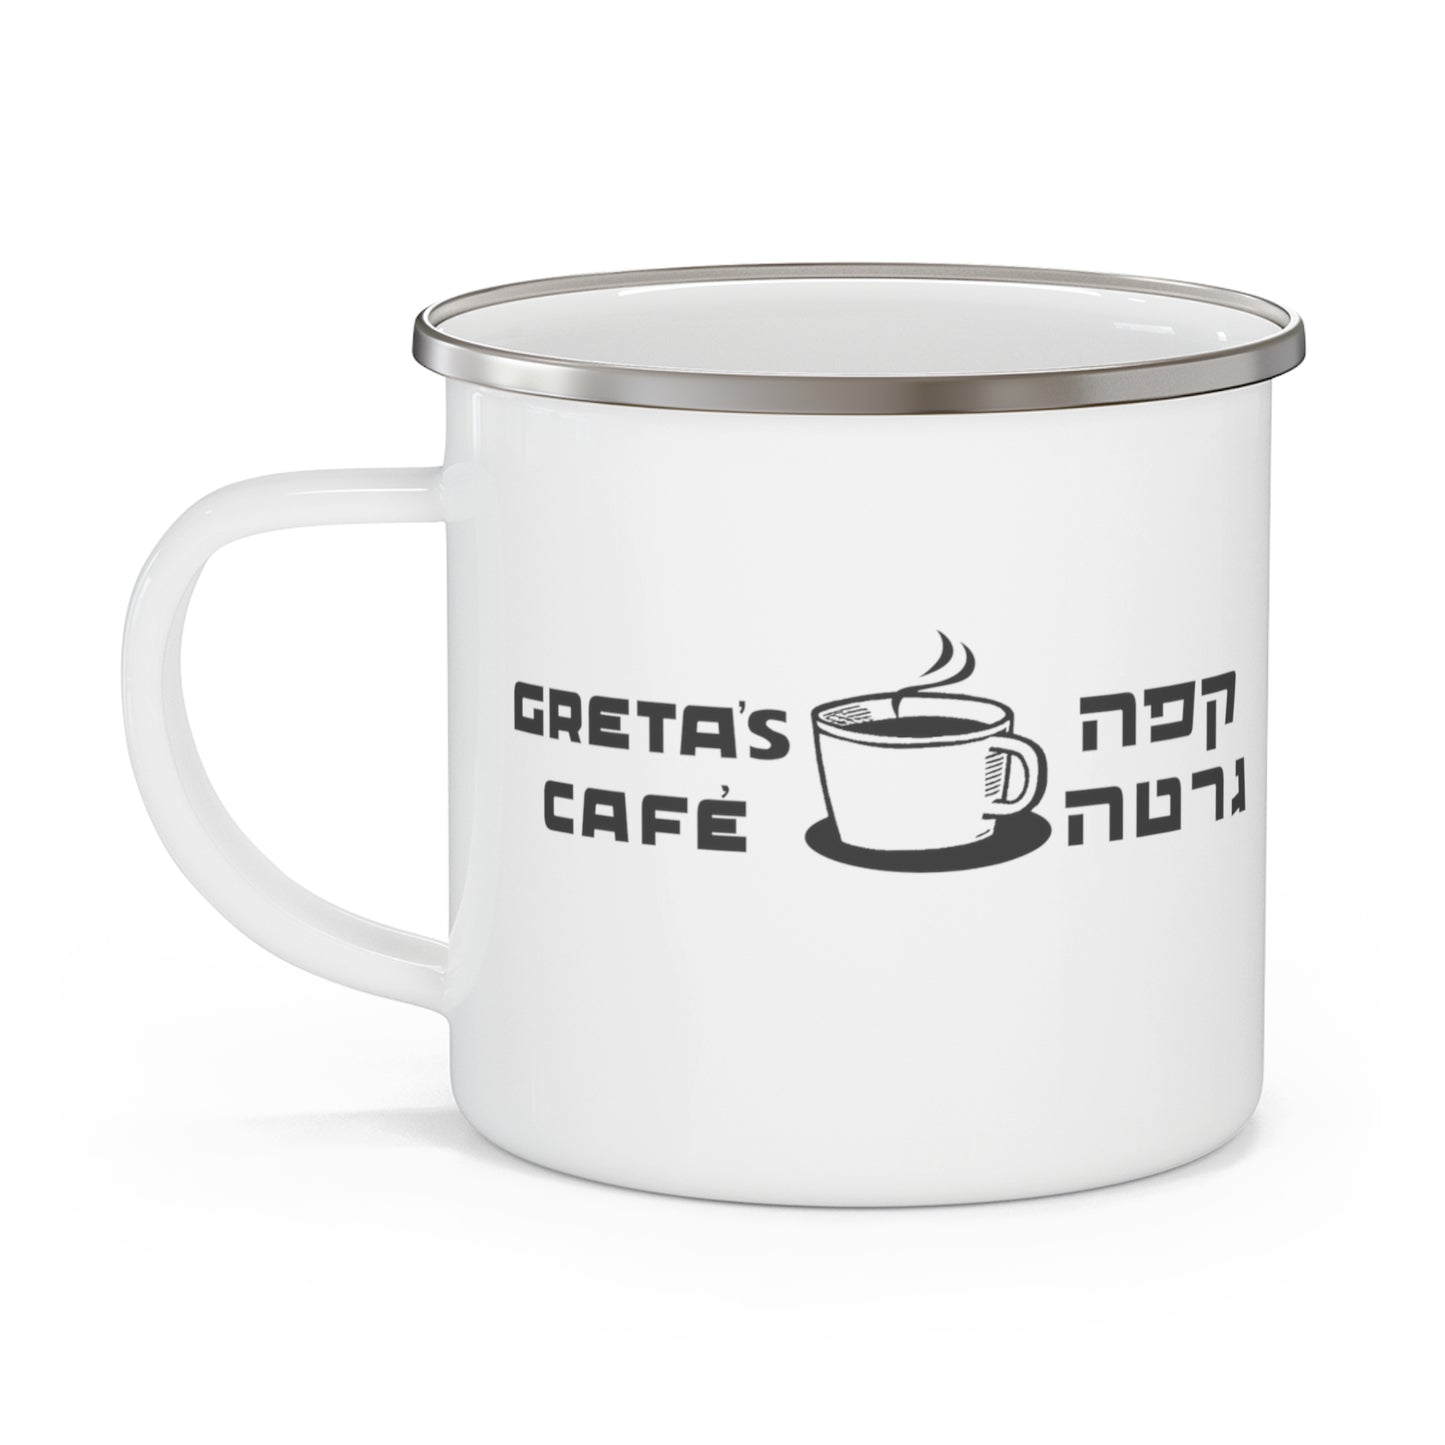 Greta's Cafe Enamel Mug - 12oz